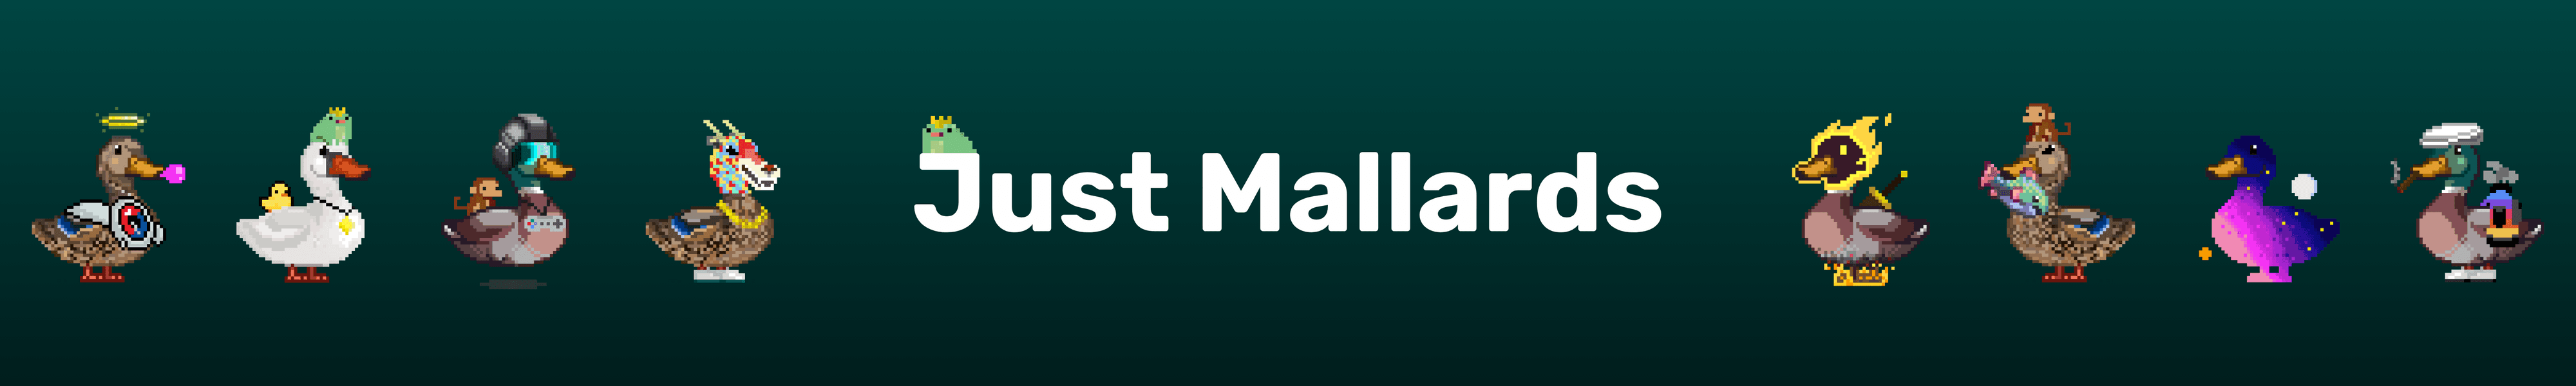 Mallard_Deployer 横幅